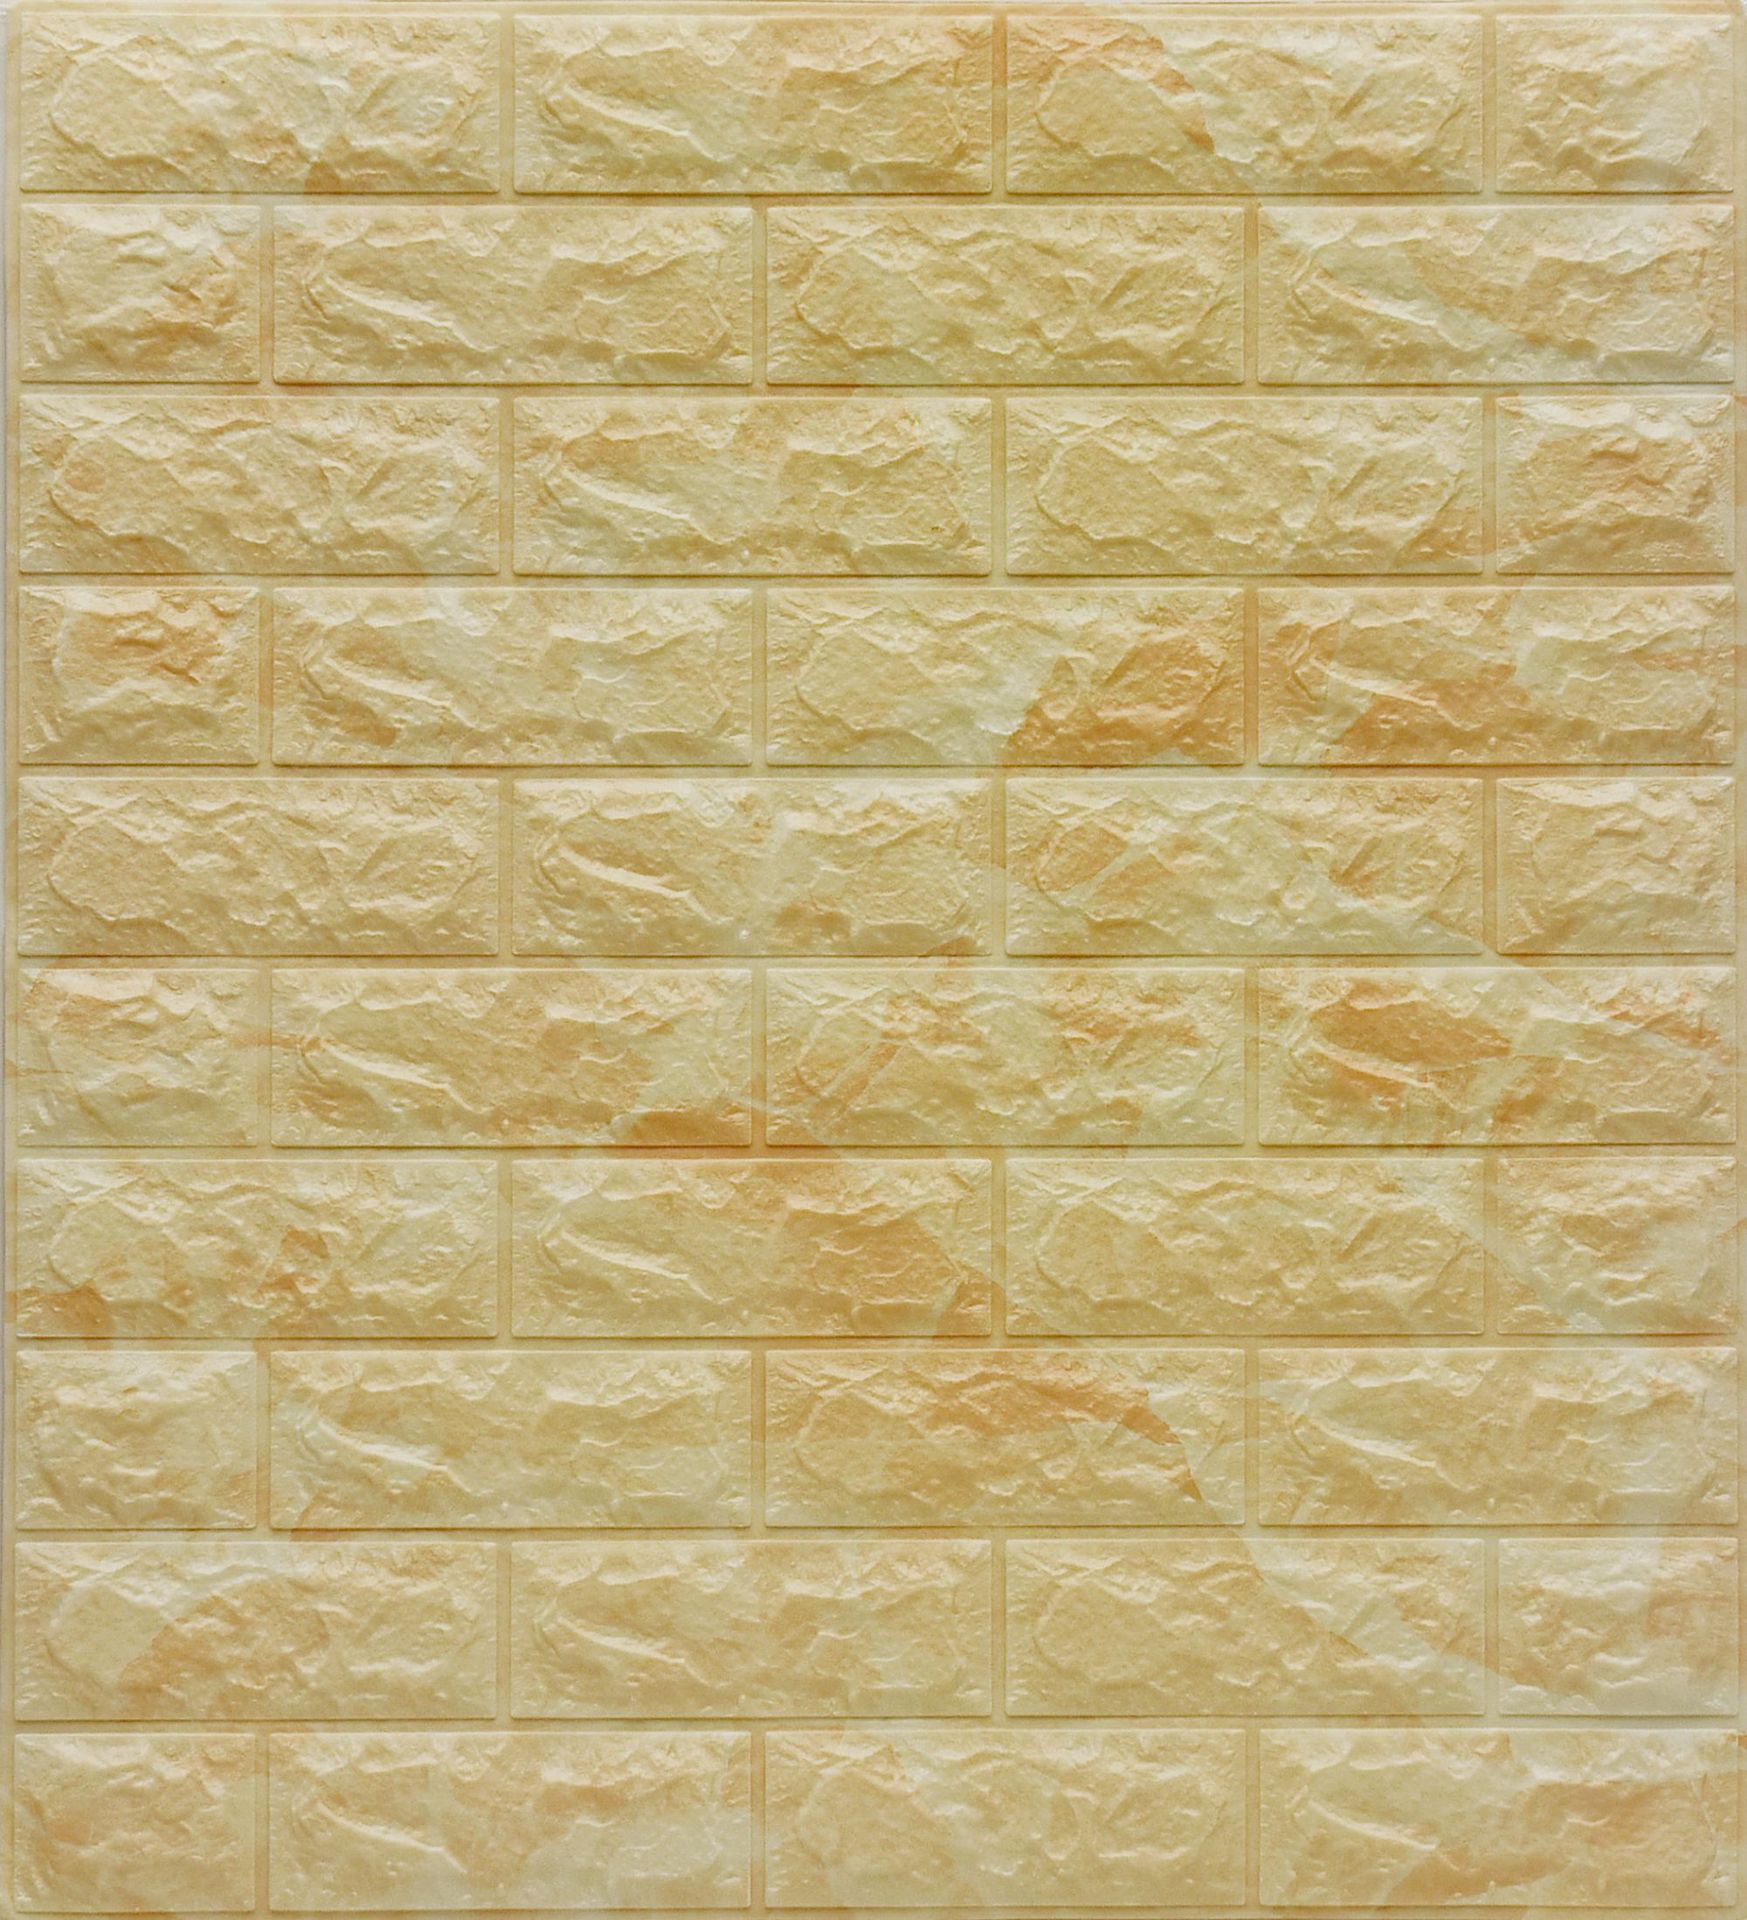 70 * 77cm Large Size 3d 3d Brick Pattern Wall Sticker Wallpaper Xpe Foam Self-Adhesive Diy Wallpaper